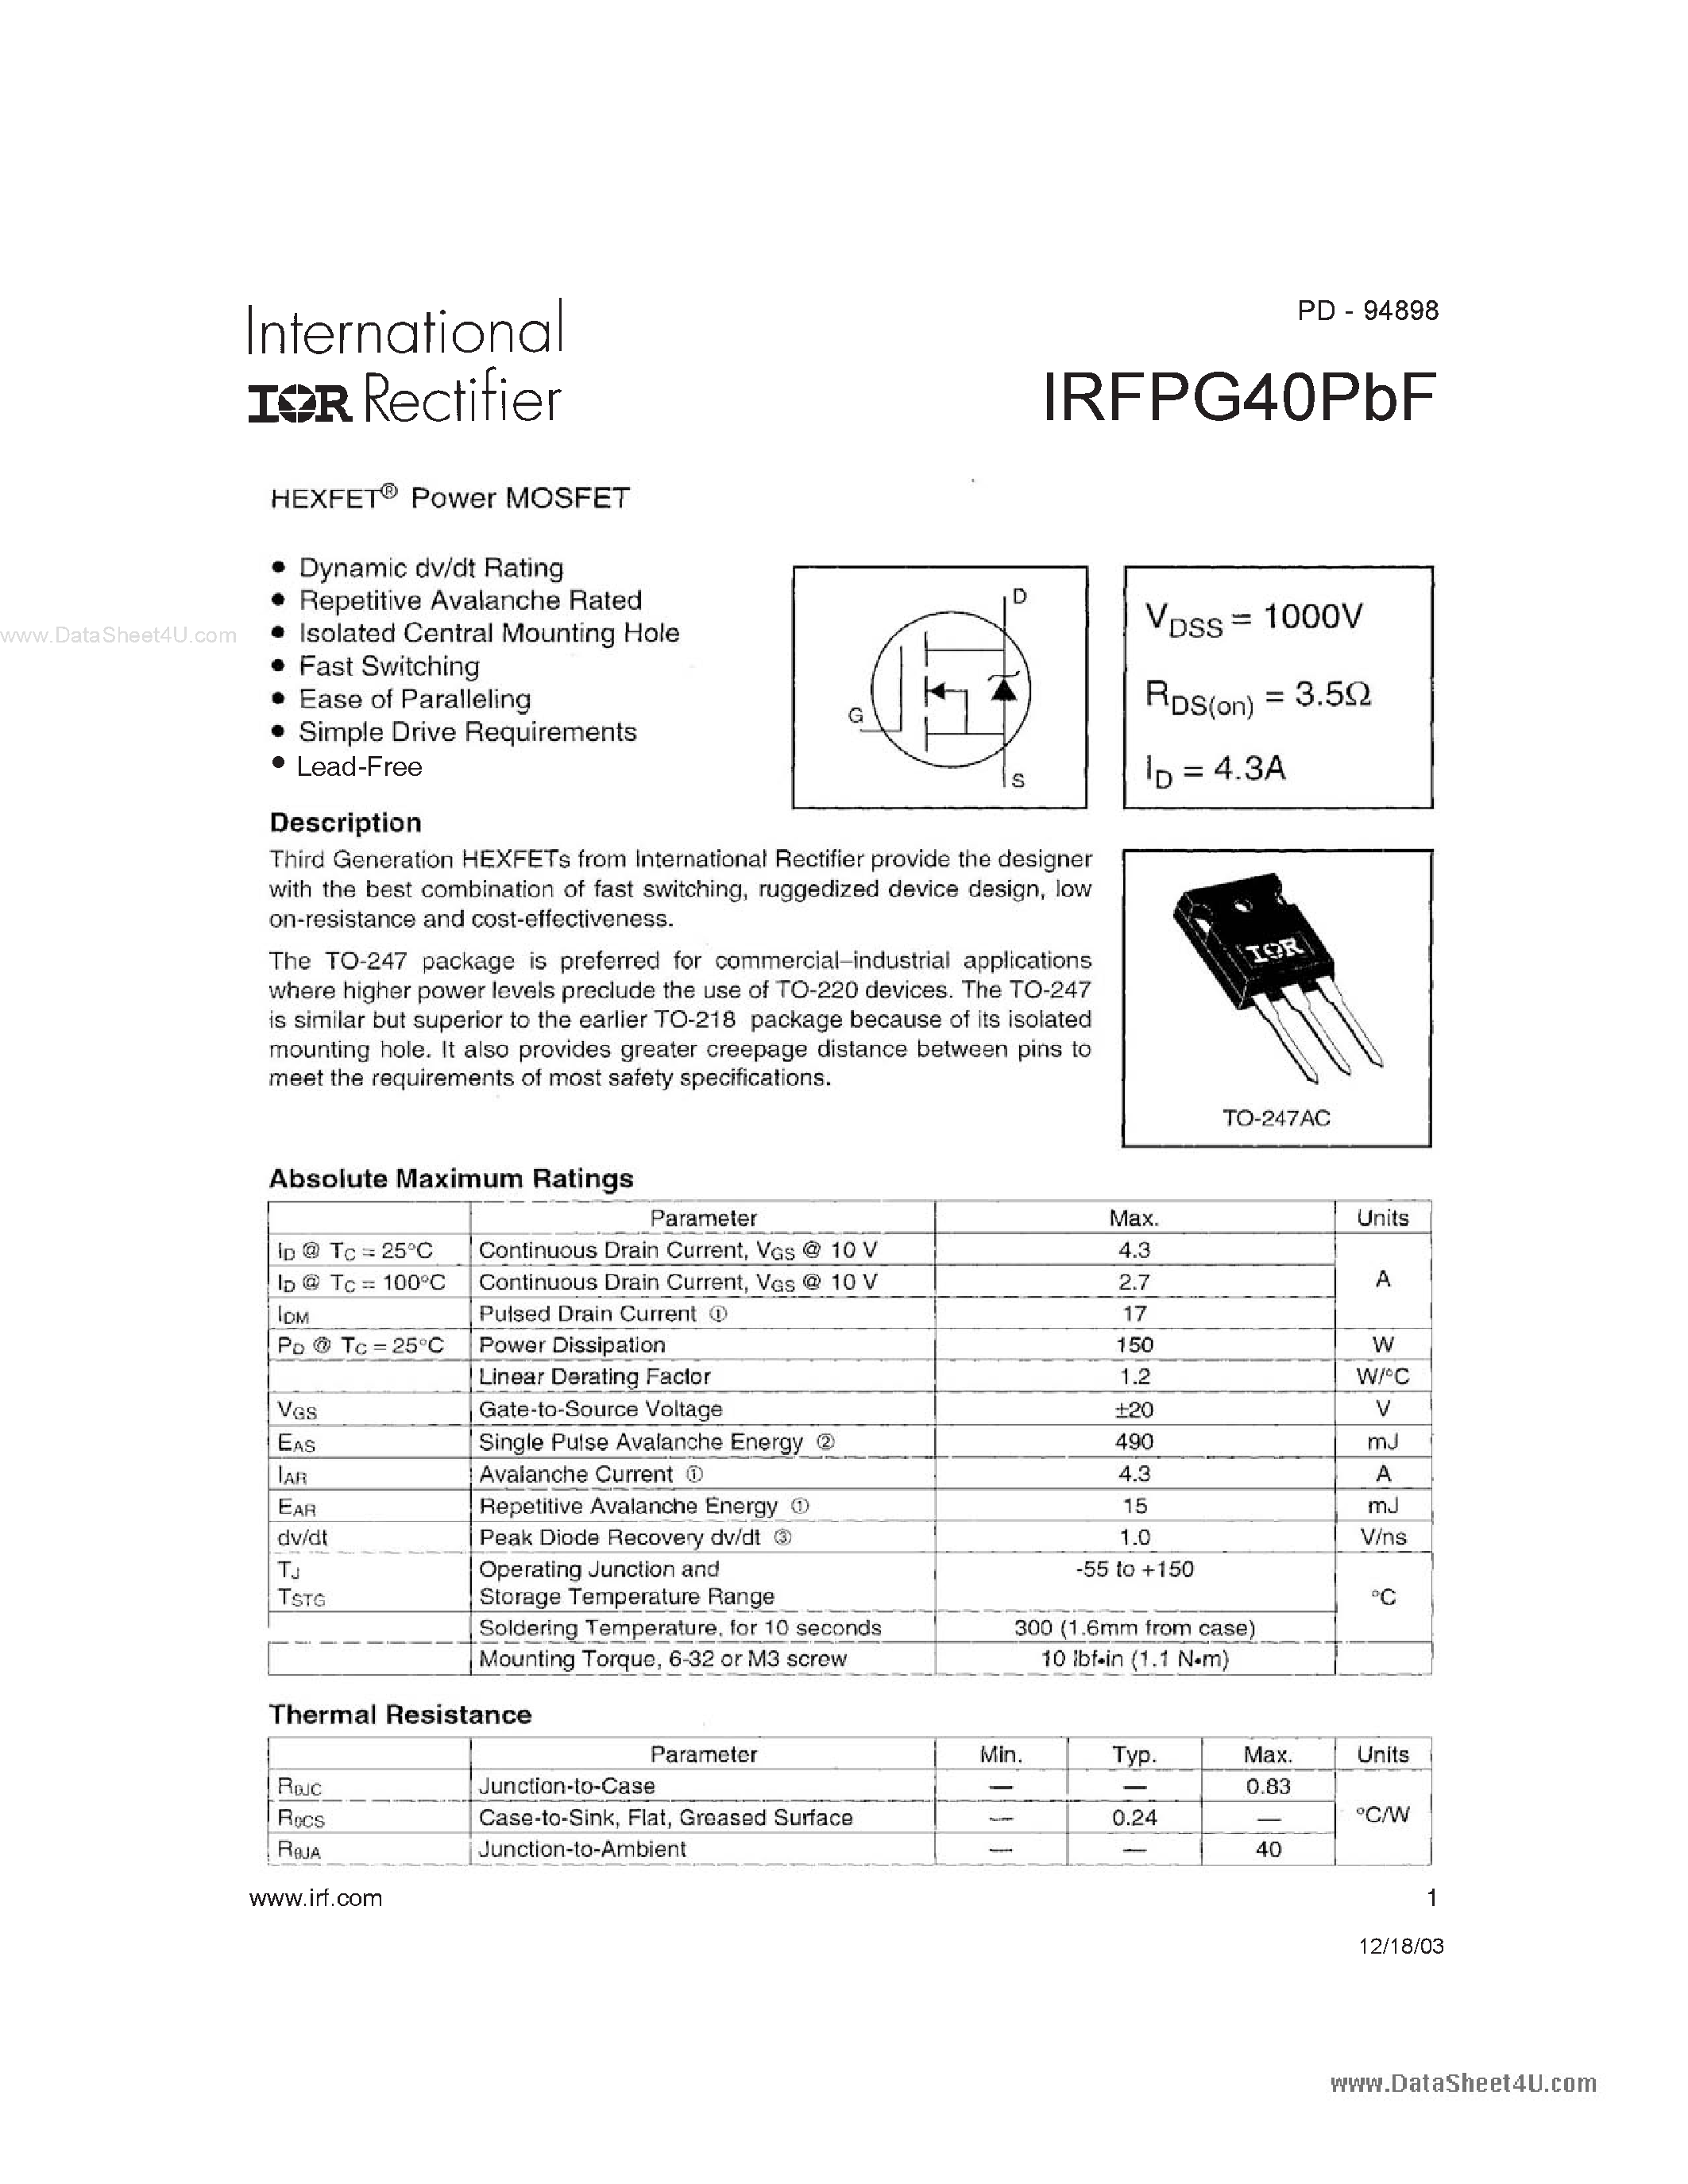 Даташит IRFPG40PBF - HEXFET POWER MOSFET страница 1